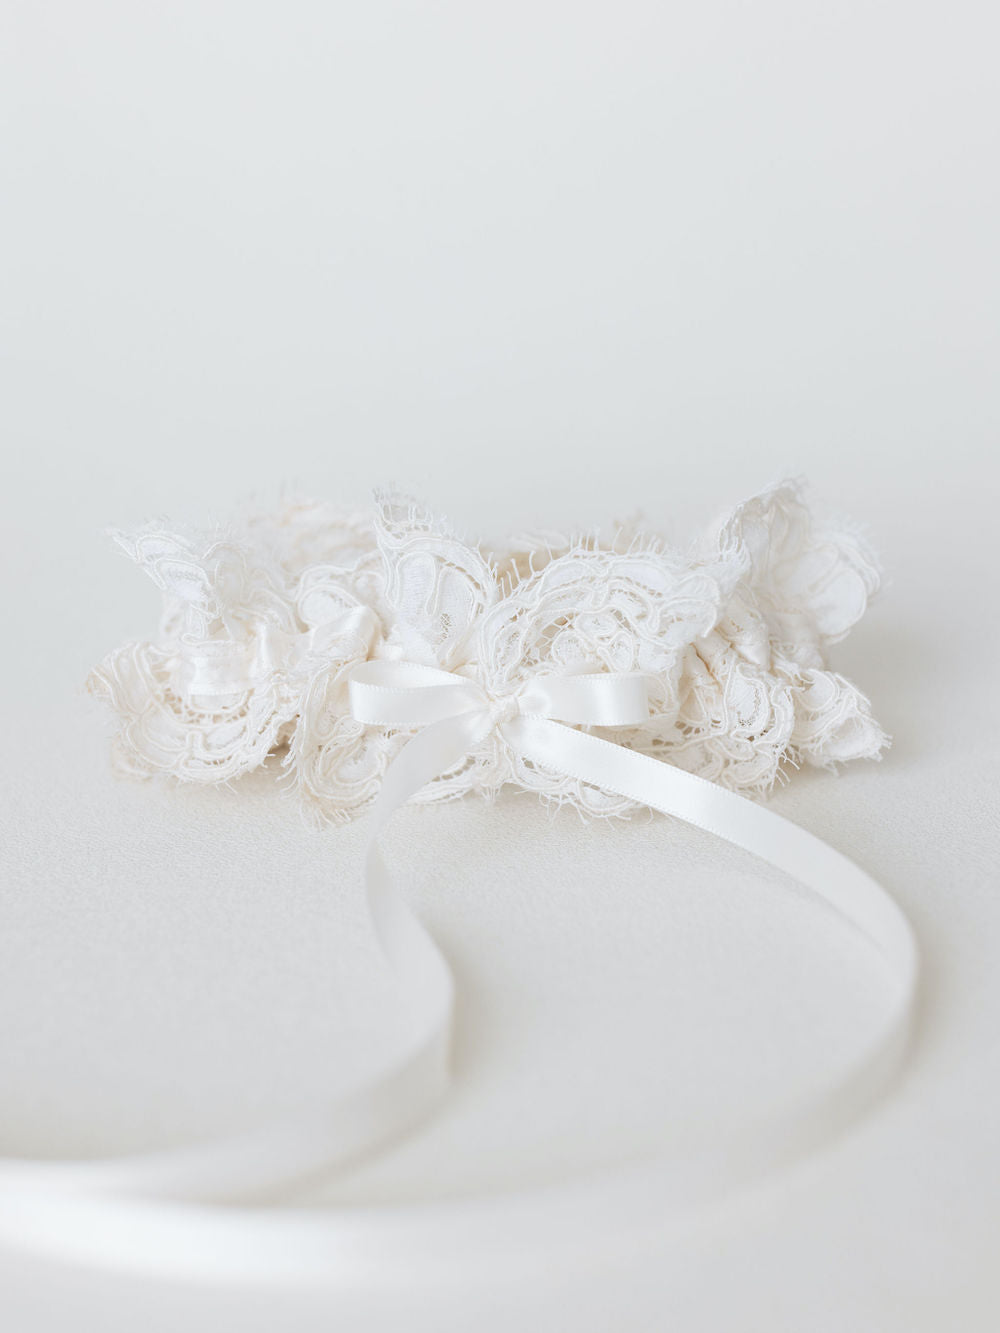 ivory wedding garter handmade with eyelash lace from mom's wedding dress by The Garter Girl